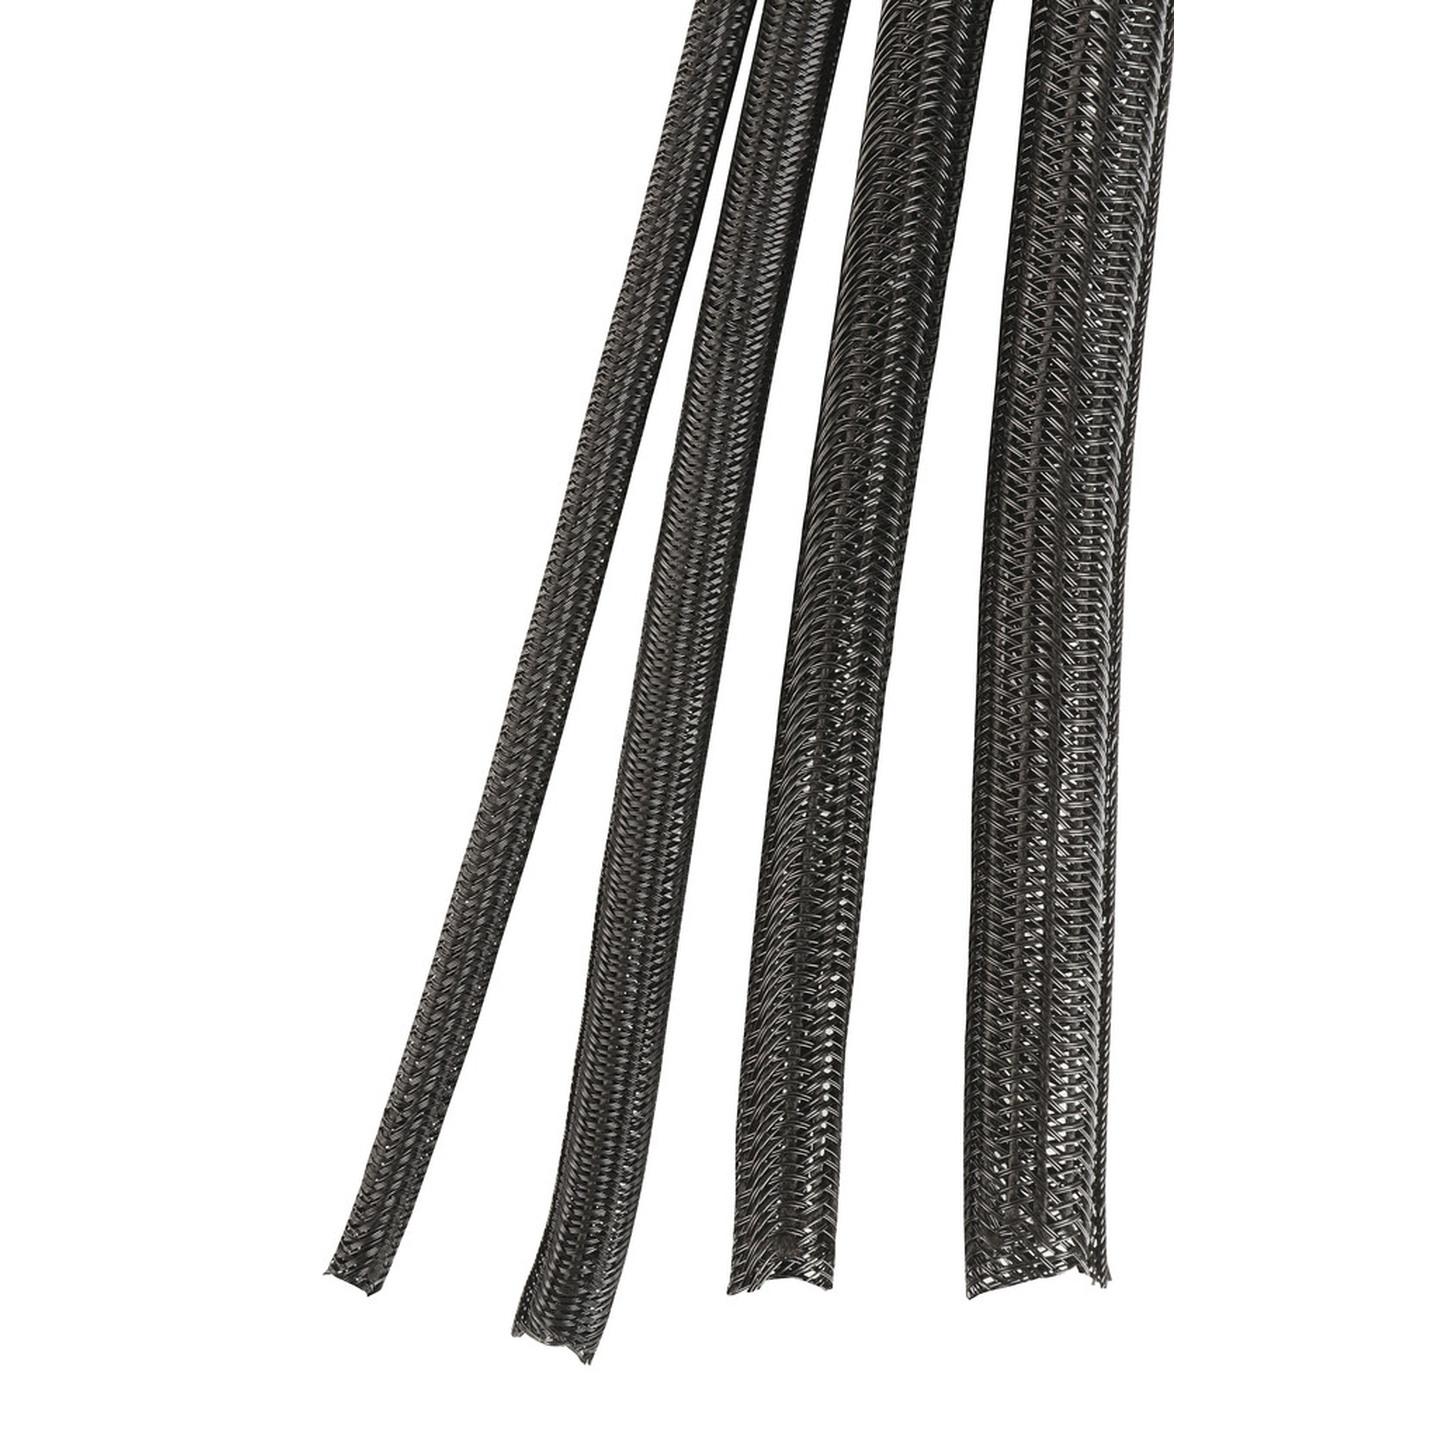 Self-closing Braided Wire Wrap - 13mm x 2m